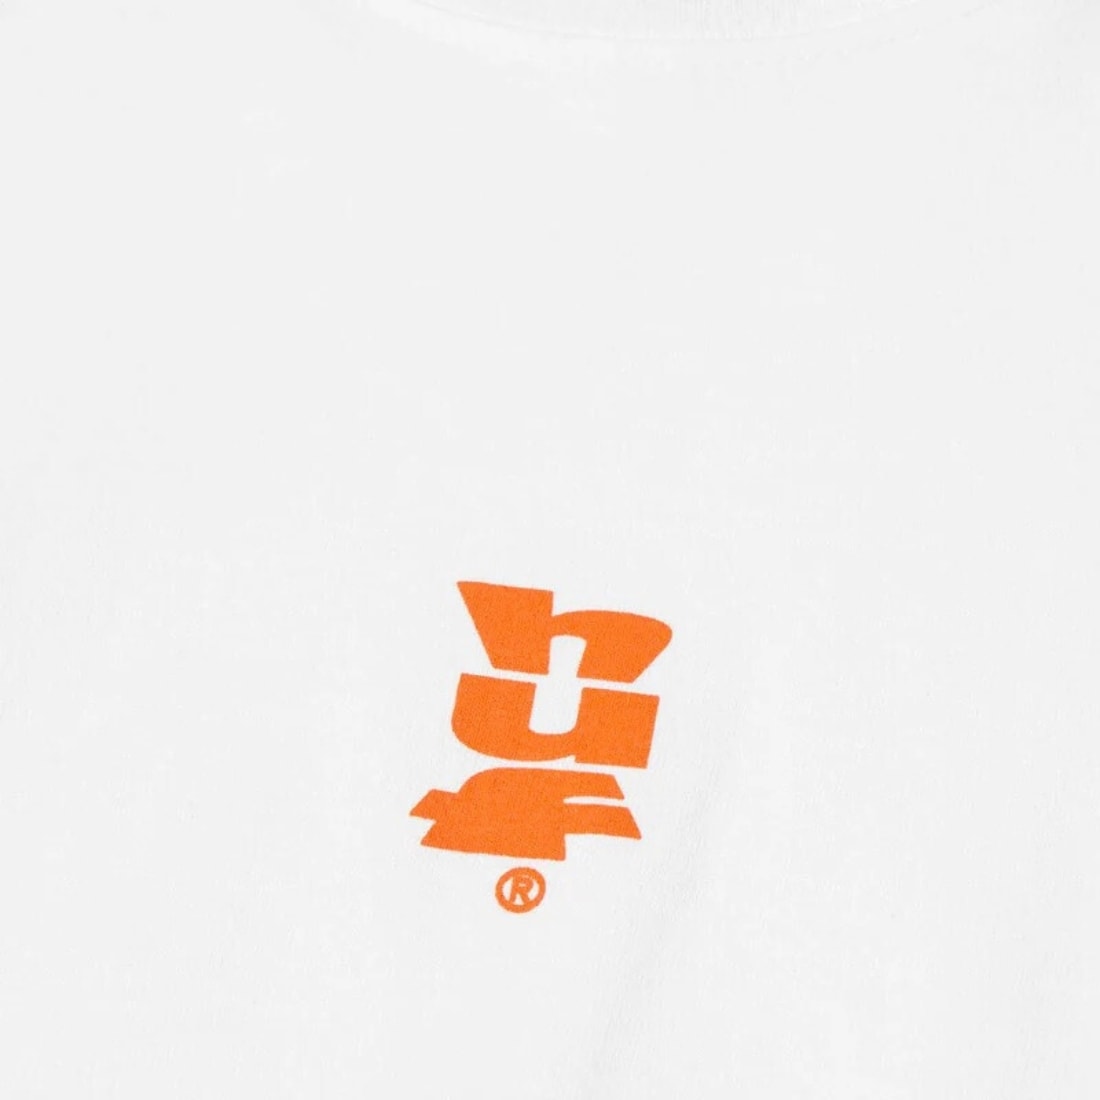 Huf Megablast Stretch Longsleeve T-Shirt - White - Mens Graphic T-Shirt by Huf